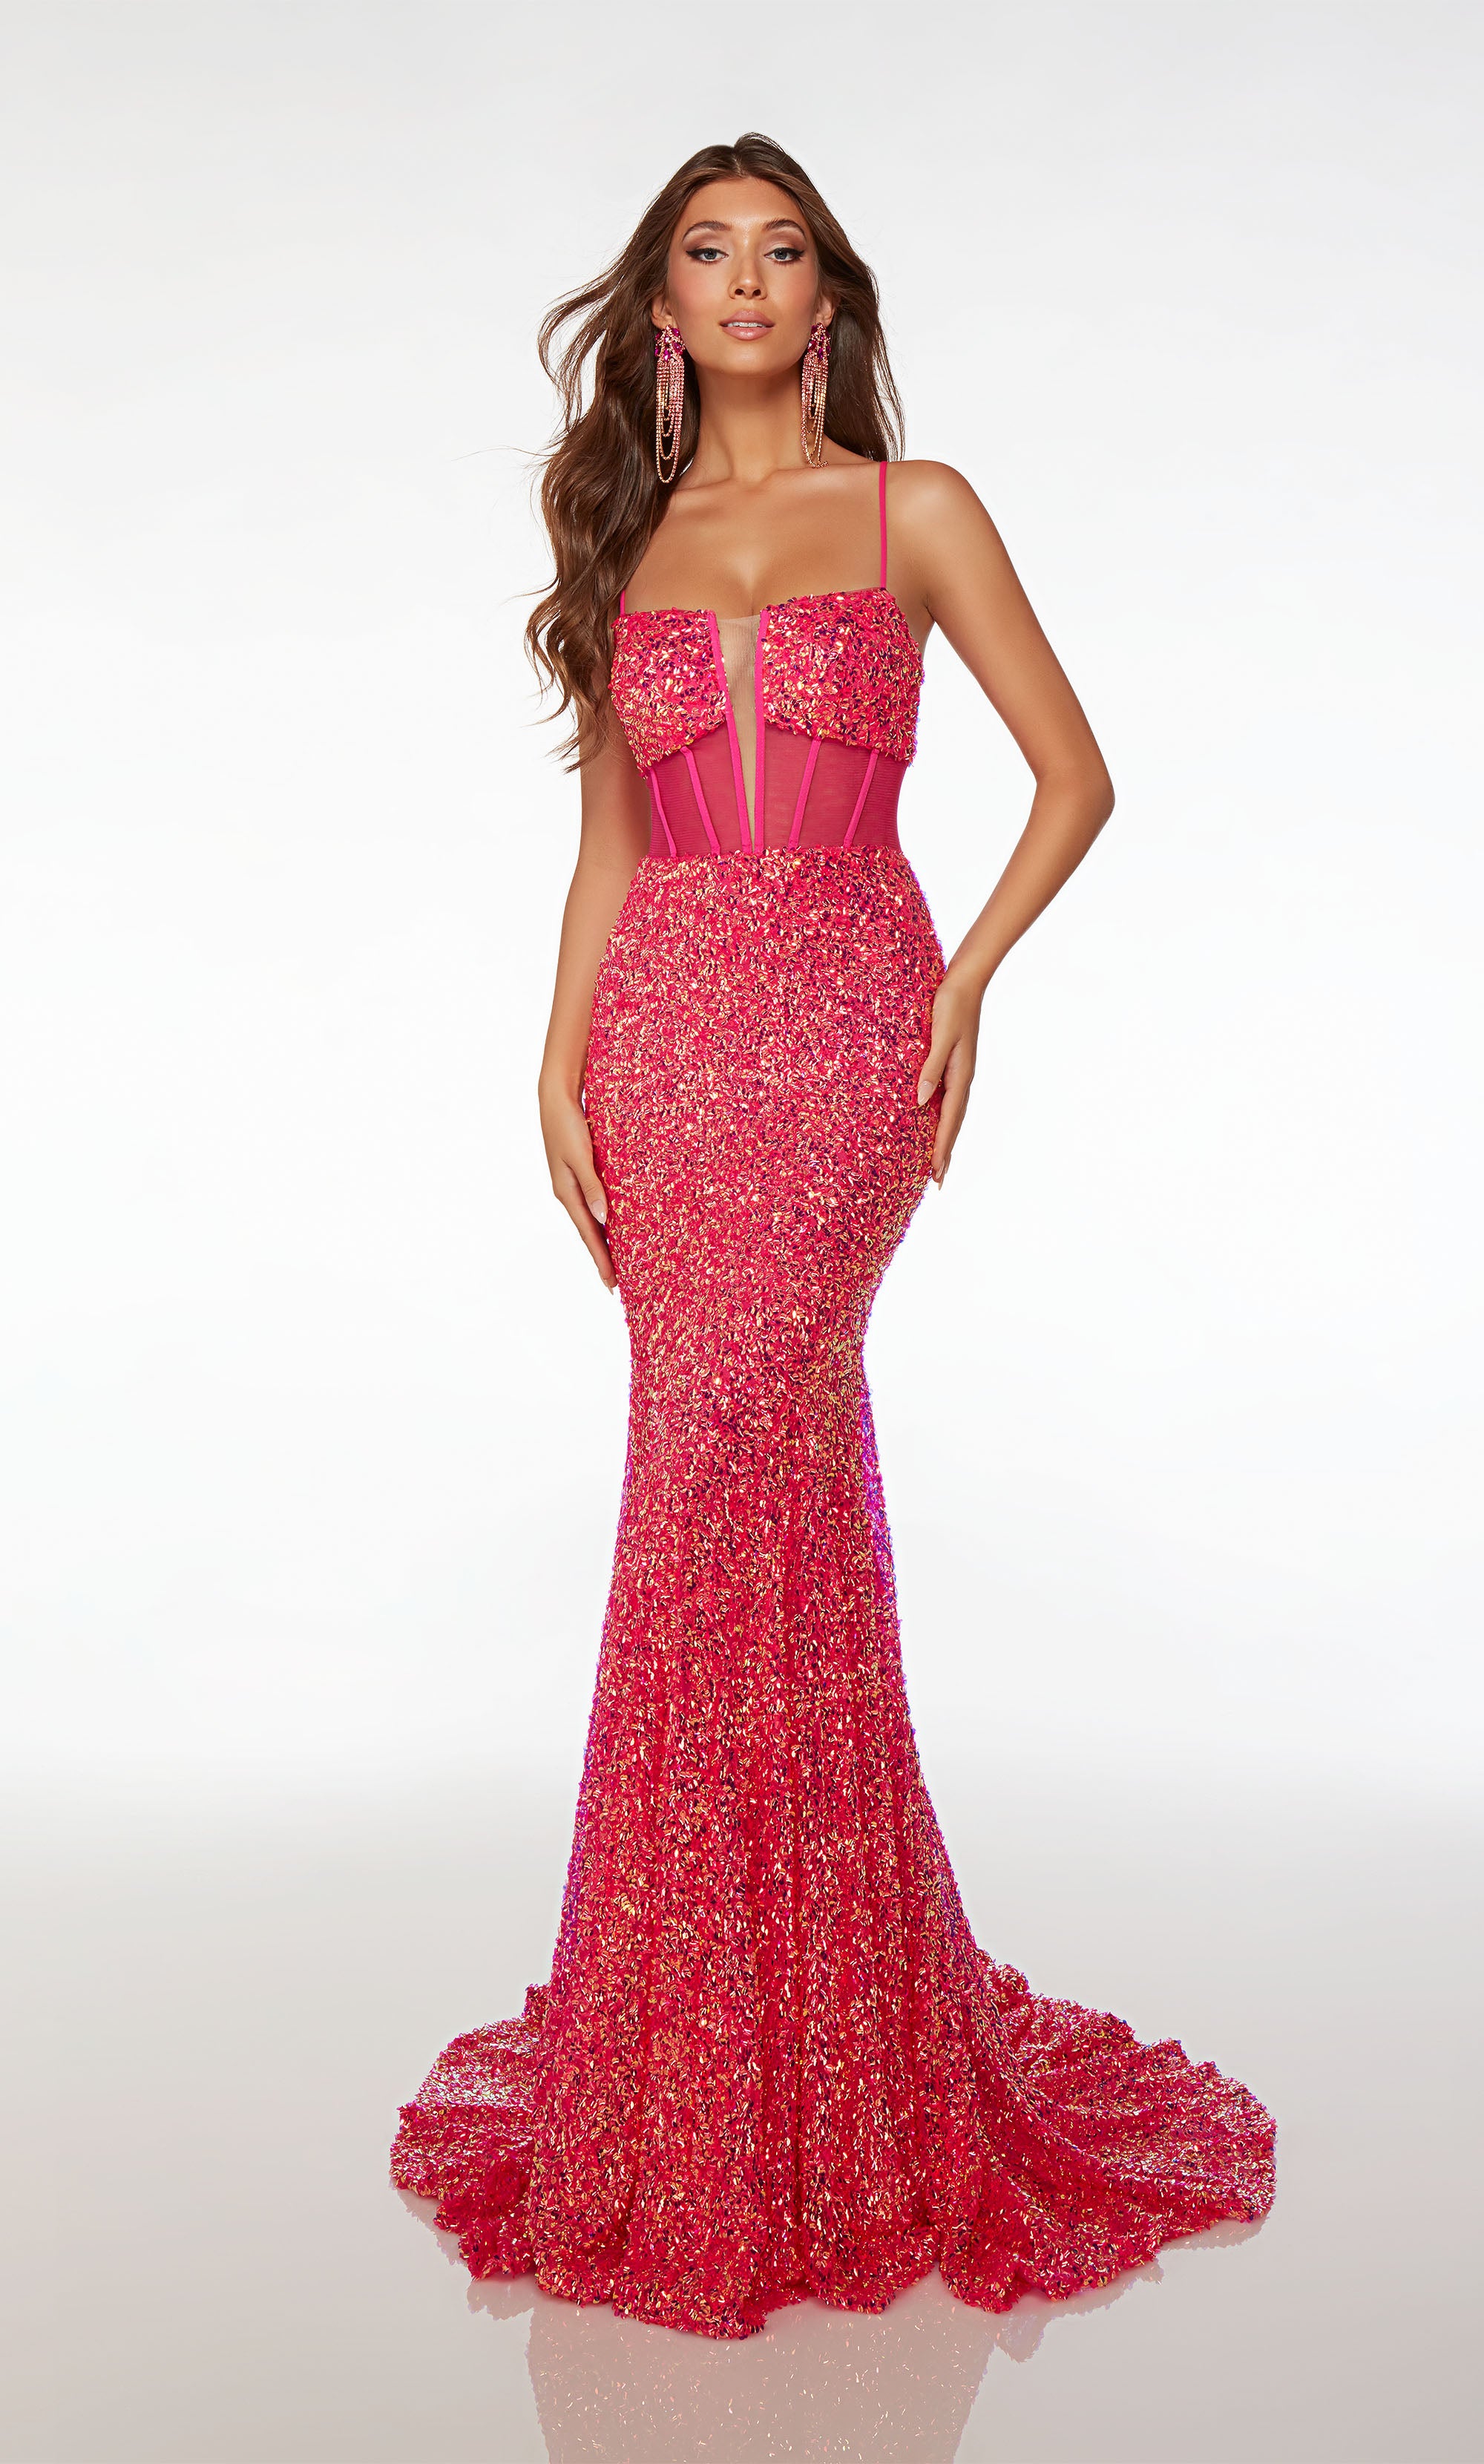 Mermaid Spaghetti Strap Satin Long Prom Dress, Hot Pink Corset Evening